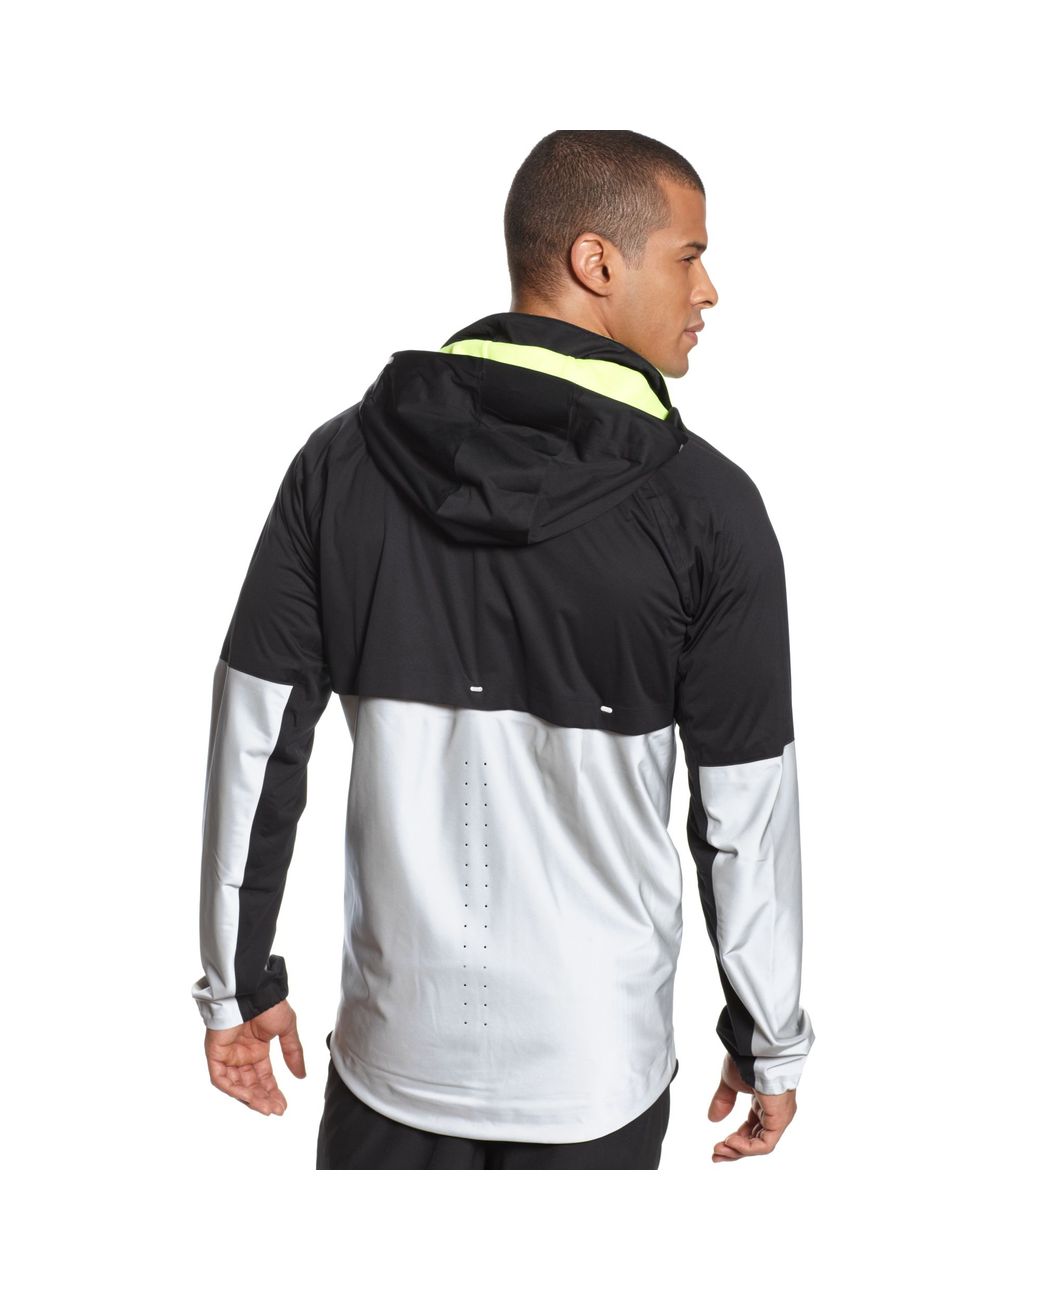 Nike Men's Black Shield Flash Hooded Running Jacket